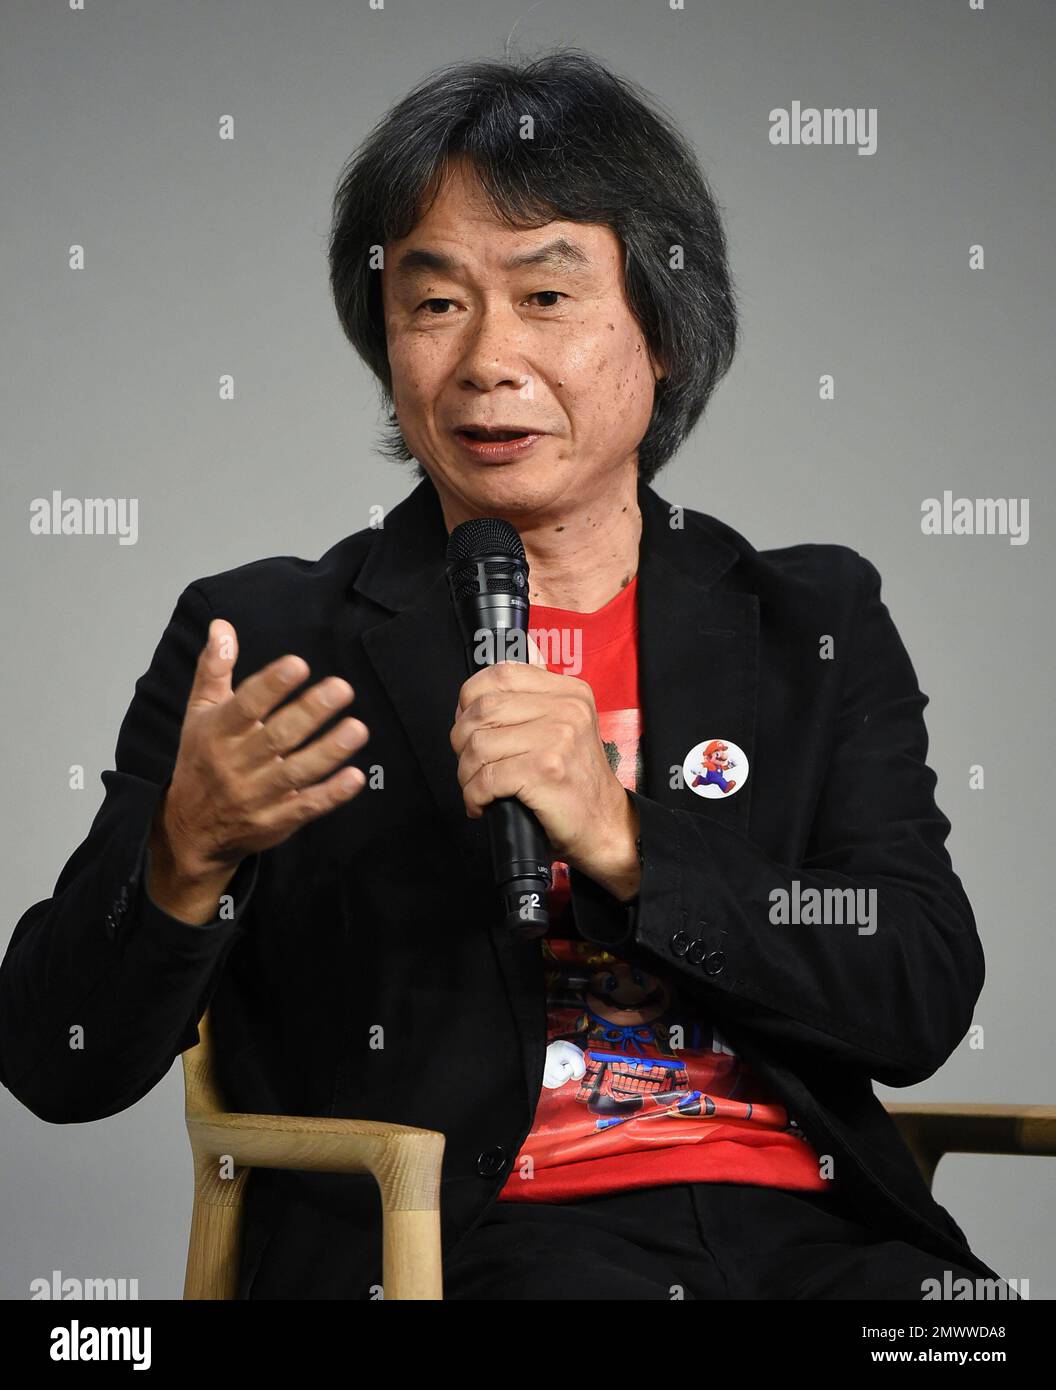 Nintendo's Mario designer Shigeru Miyamoto working to turn game consoles  into teaching tools – New York Daily News